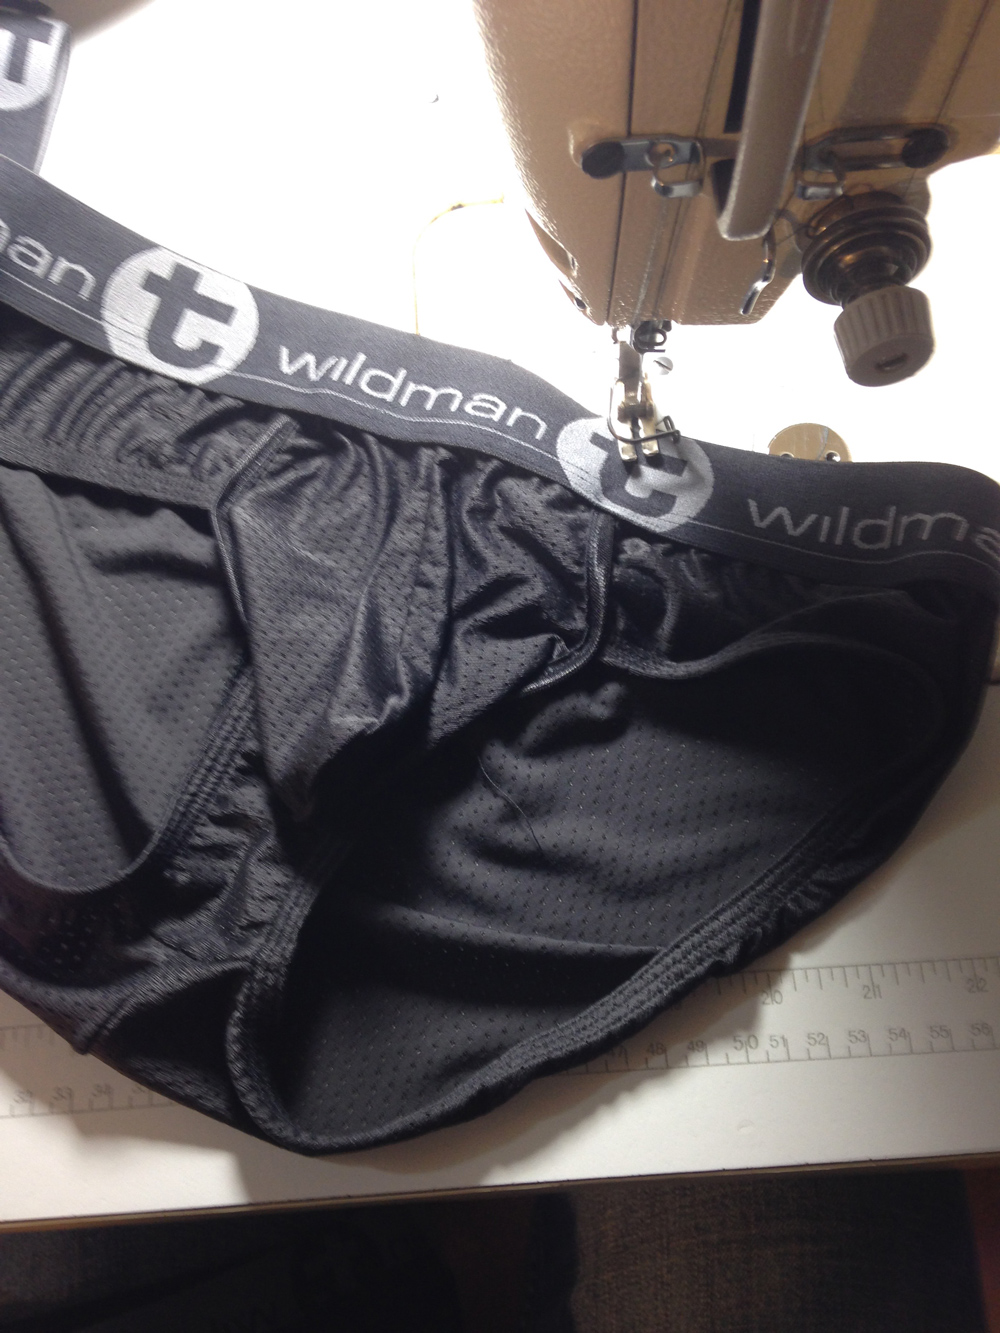 Wildmant is Telling You About the Big Boy – Underwear News Briefs